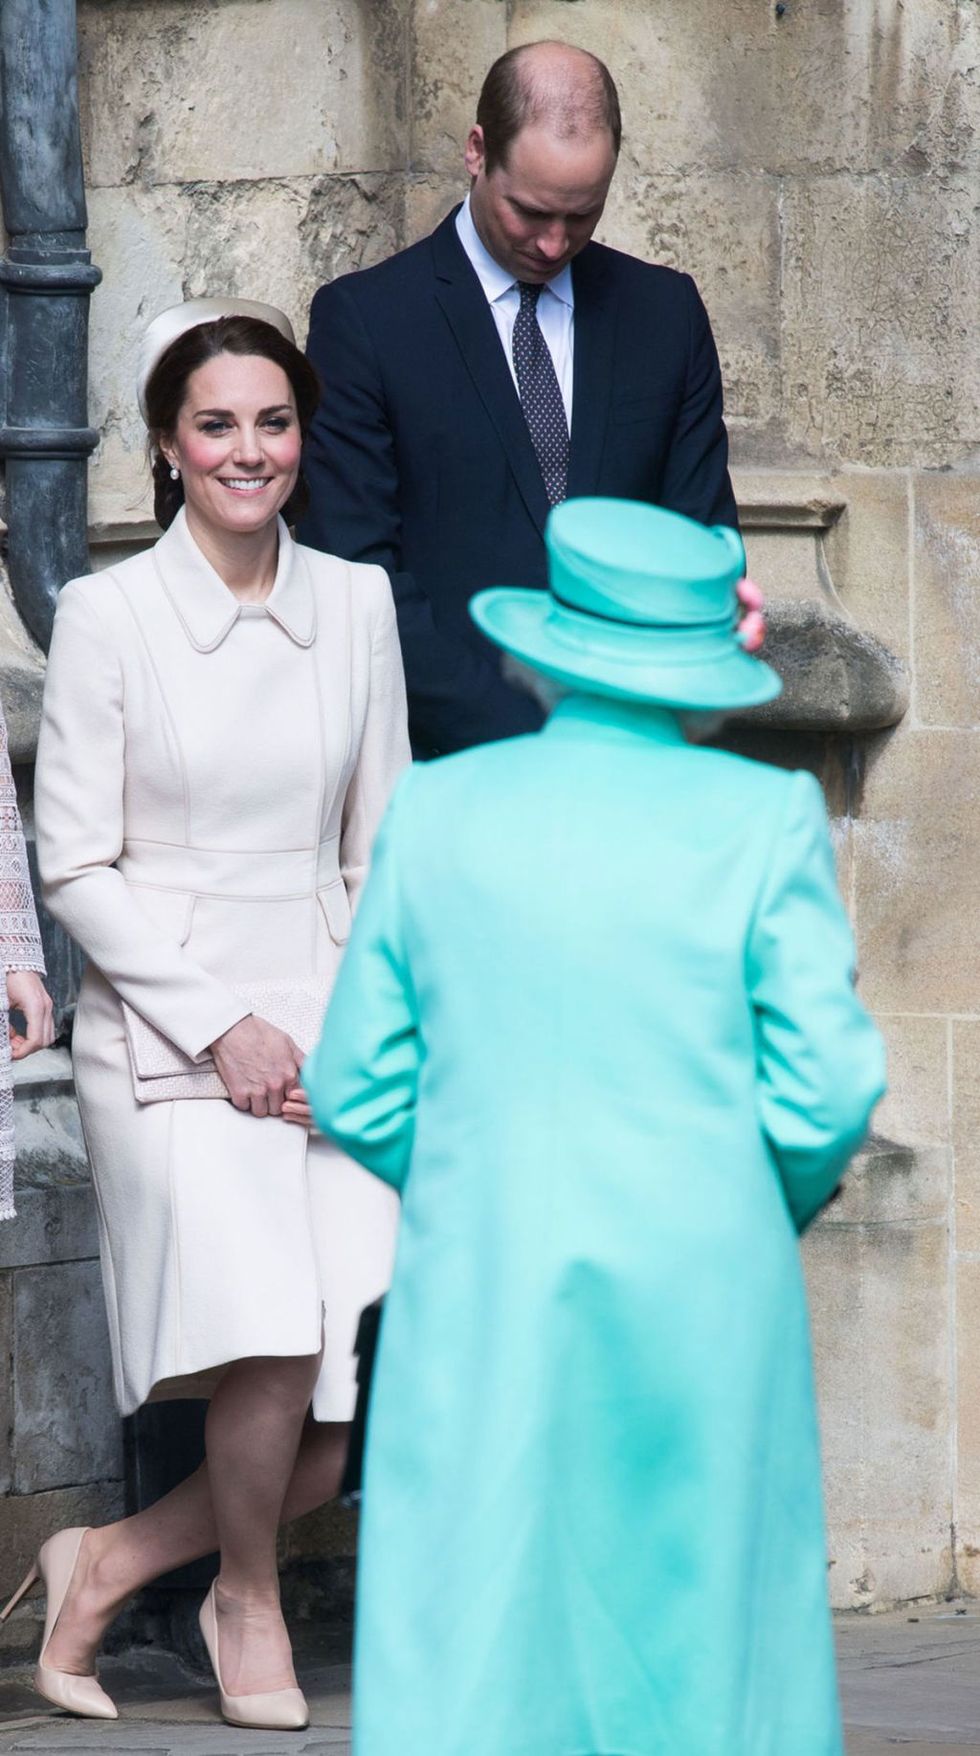 <p>王室儀礼に従い、女王への挨拶は、男性は首を曲げるように、女性は膝を曲げて跪礼（きれい）をして敬意を表す。<span class="redactor-invisible-space"></span></p>